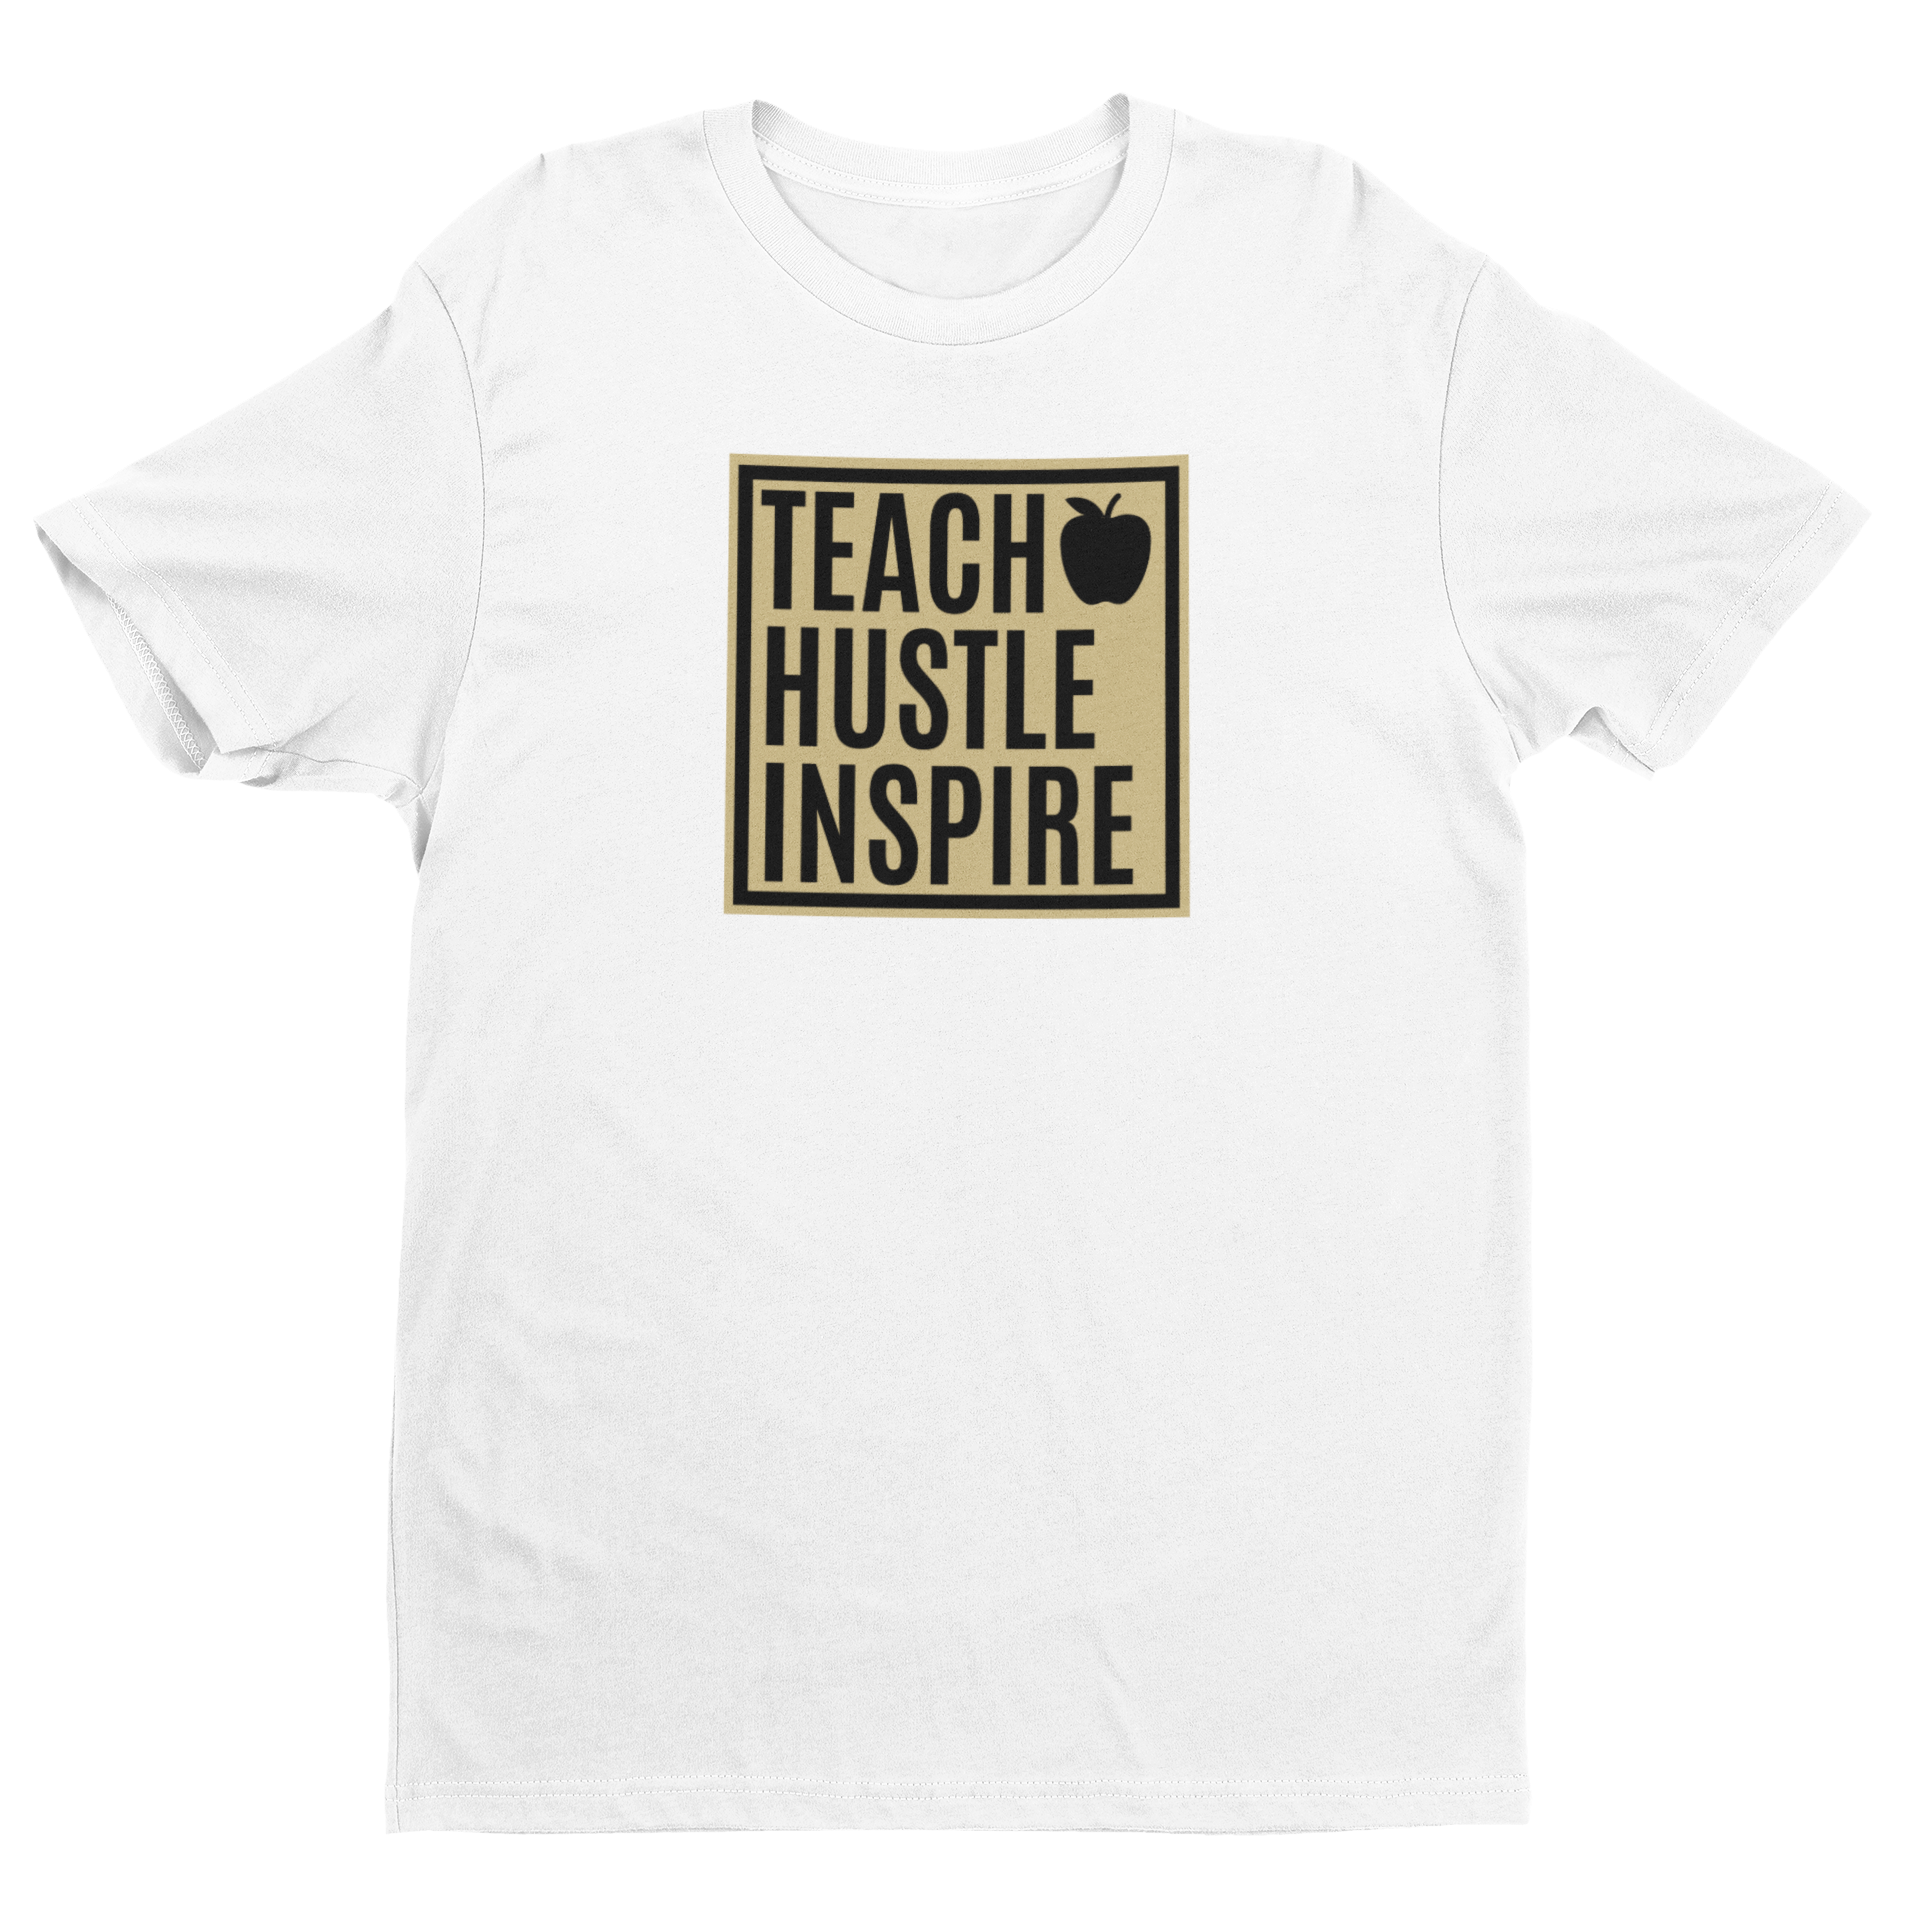 Teach Hustle Inspire - GHOST (t-shirt)